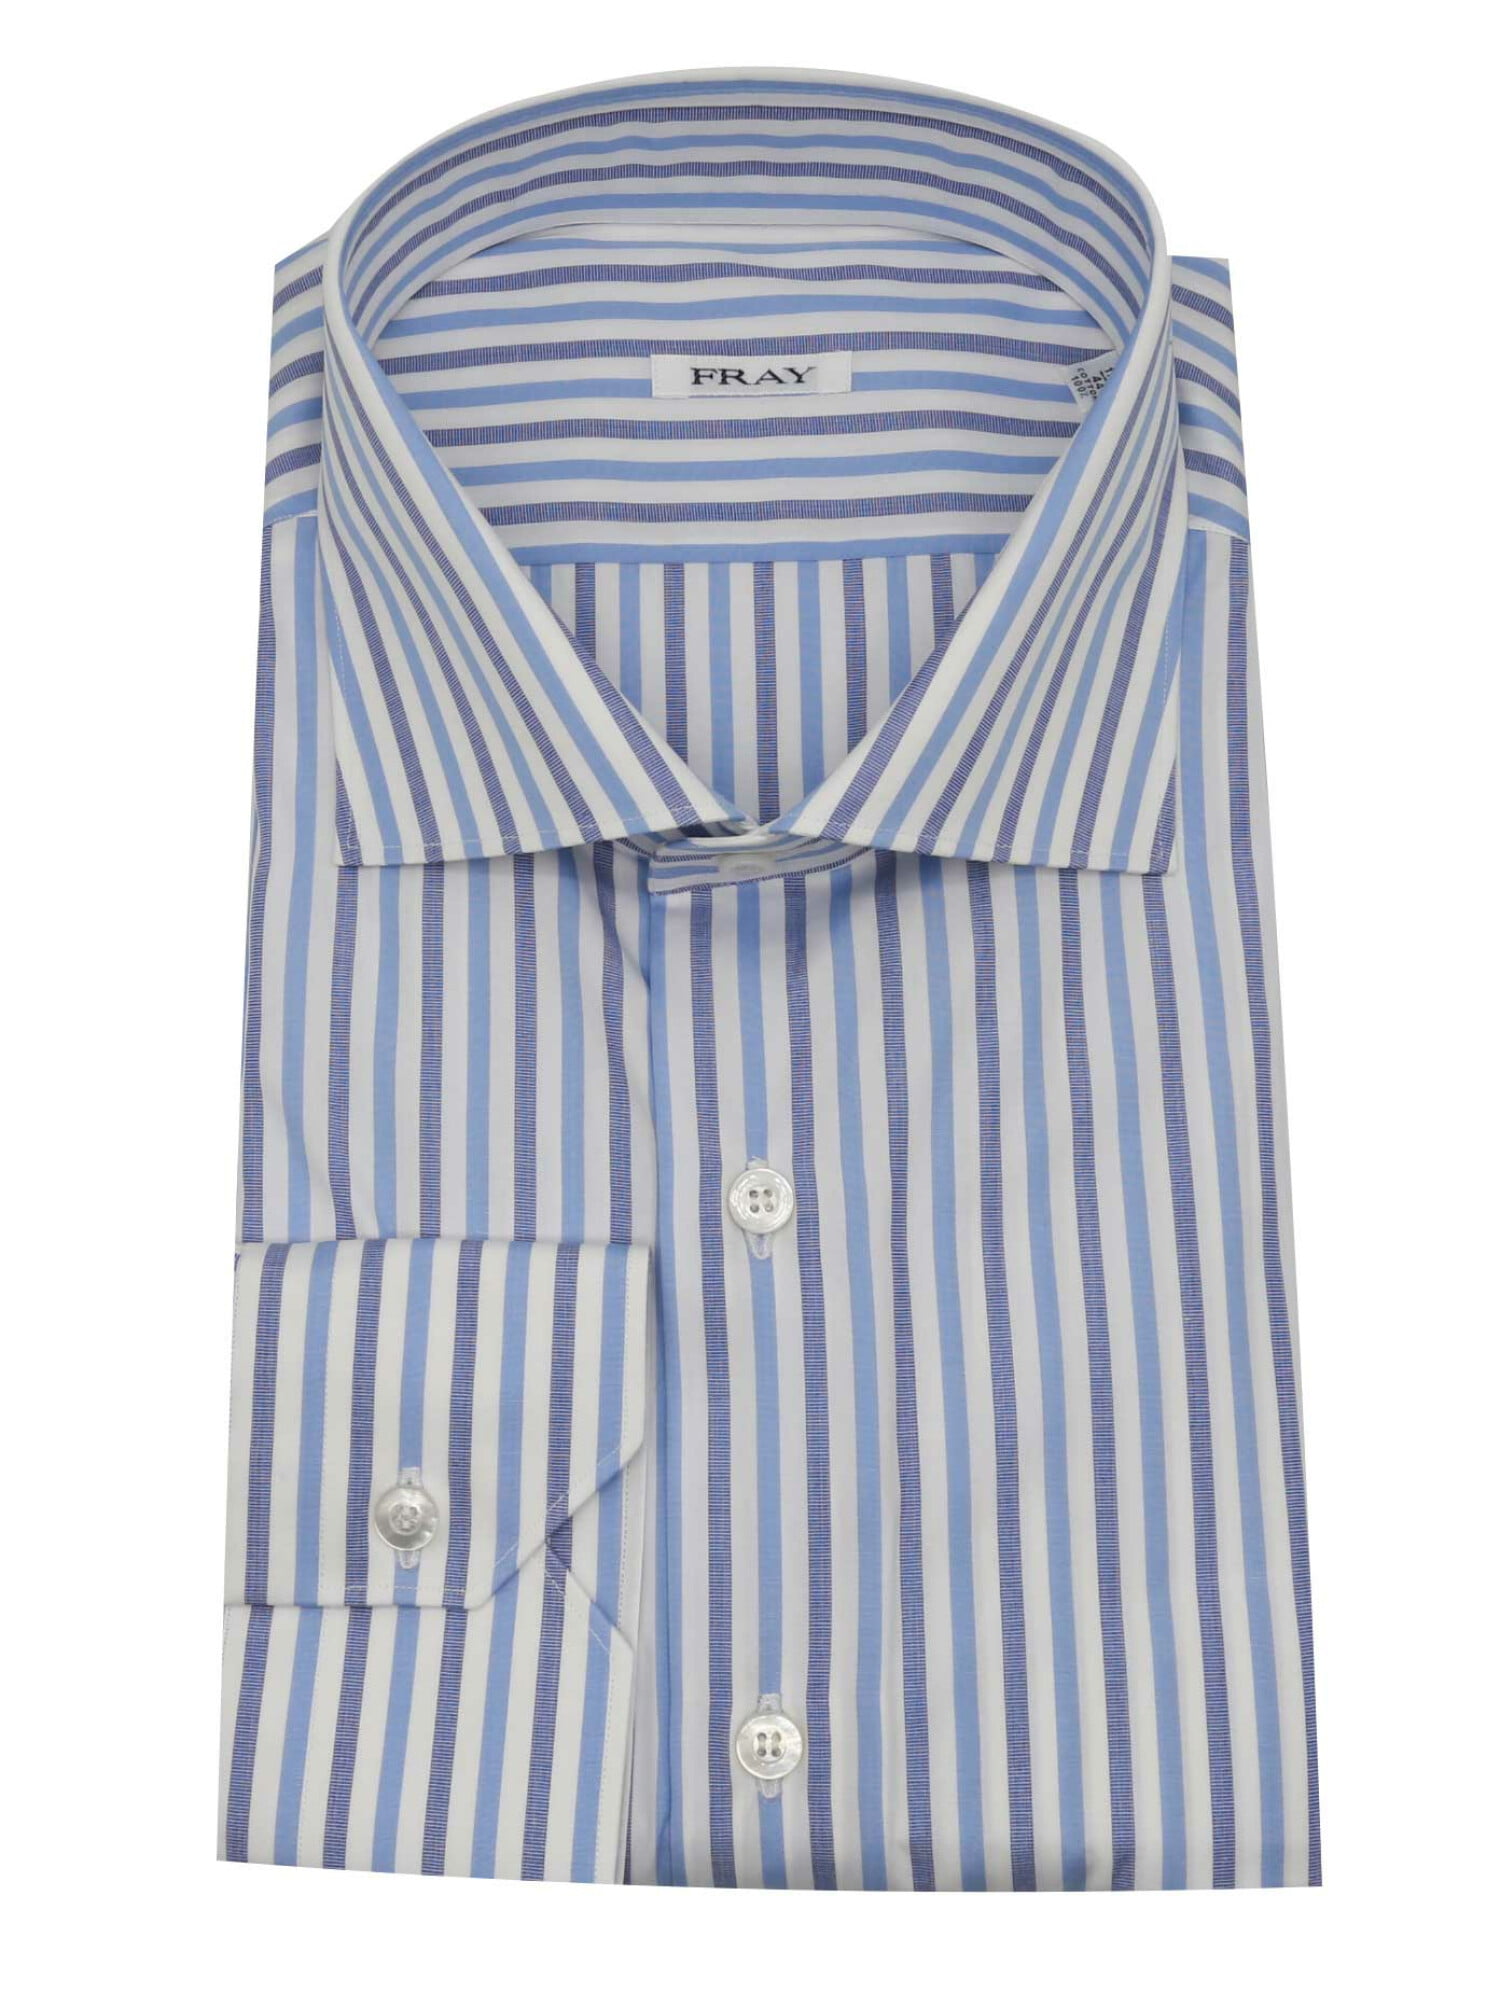 $95 CLUB ROOM Men's REGULAR-FIT BLUE CHECK CASUAL BUTTON DRESS SHIRT 17 32/33 XL 